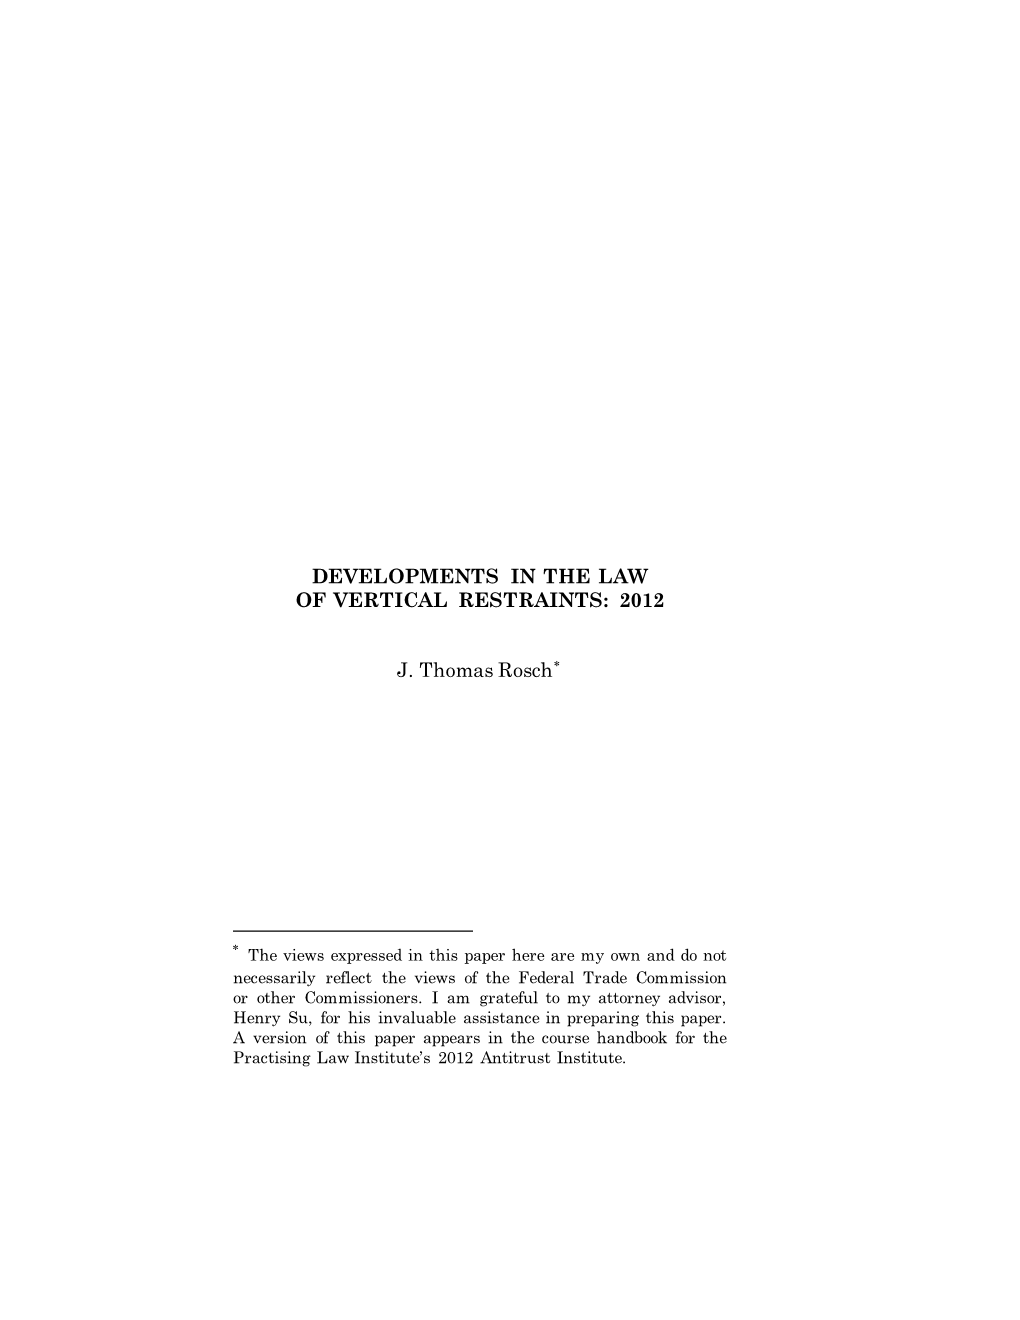 Developments in the Law of Vertical Restraints, Antitrust Institute 2012